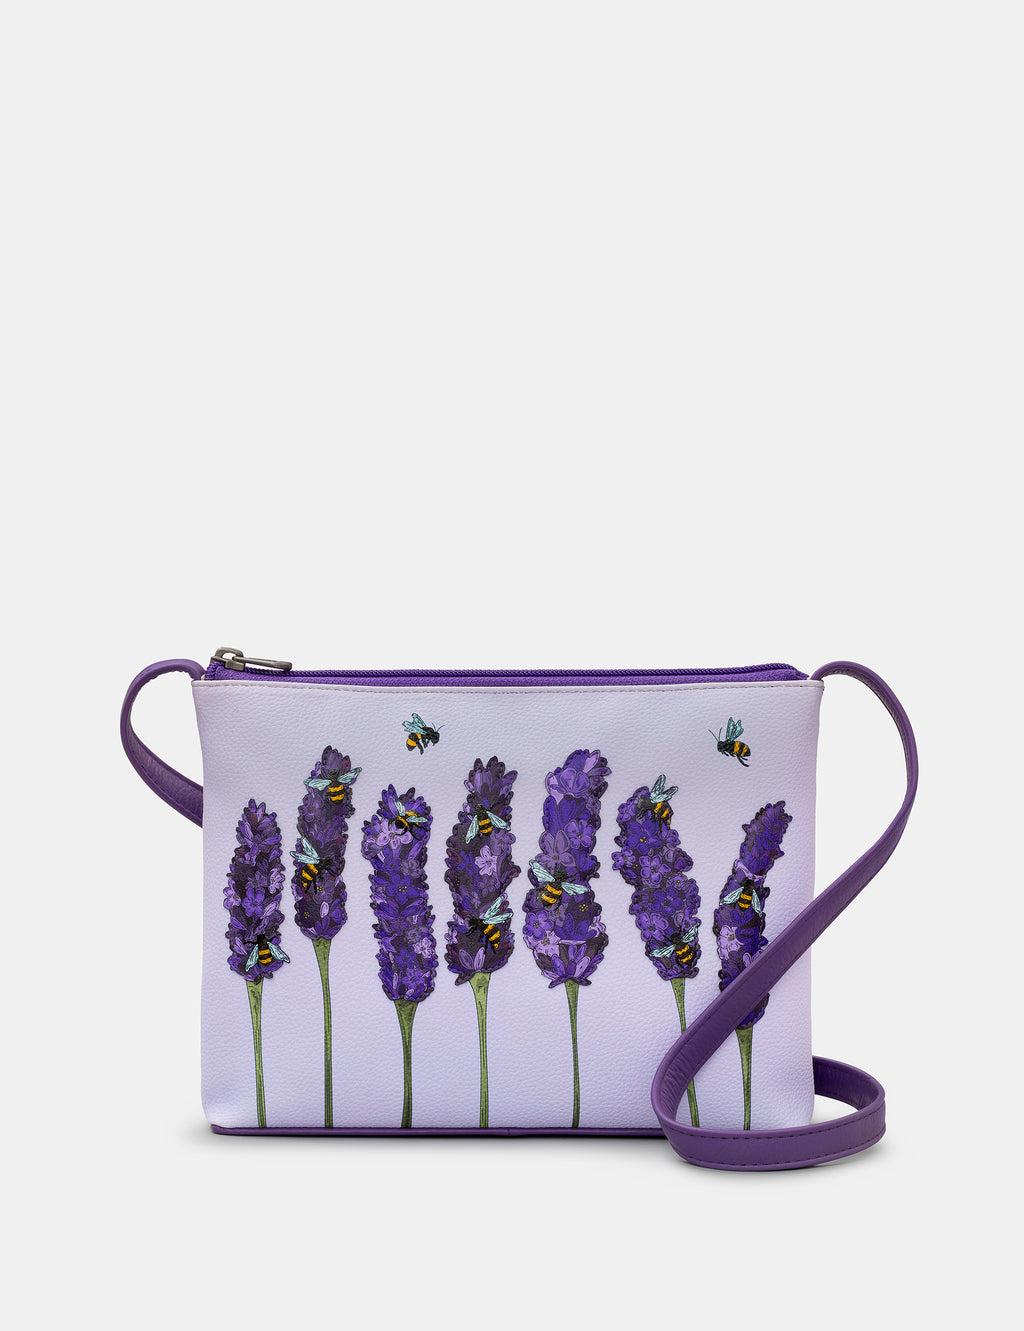 Bees Love Lavender Plum Leather Cross Body Bag